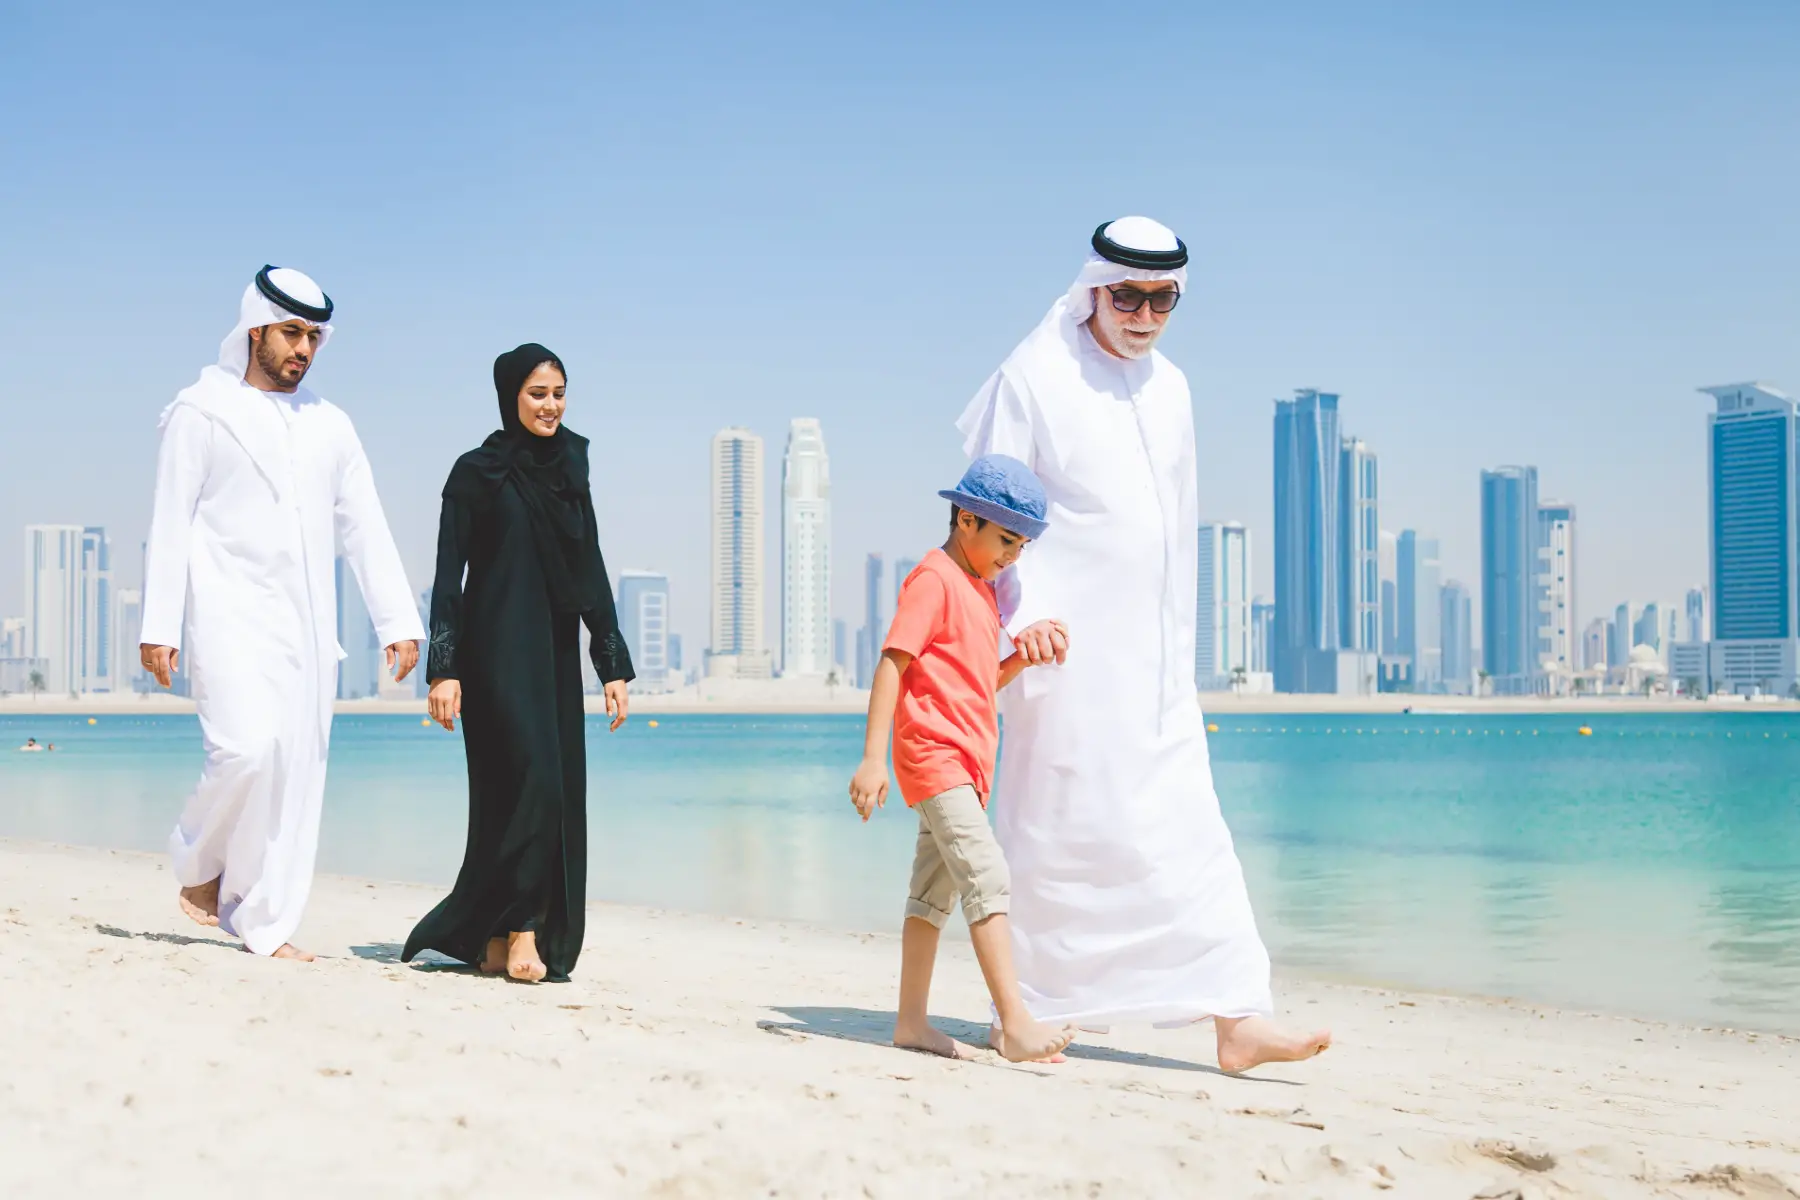 Emirati family with young boy walking on beach in Dubai, UAE